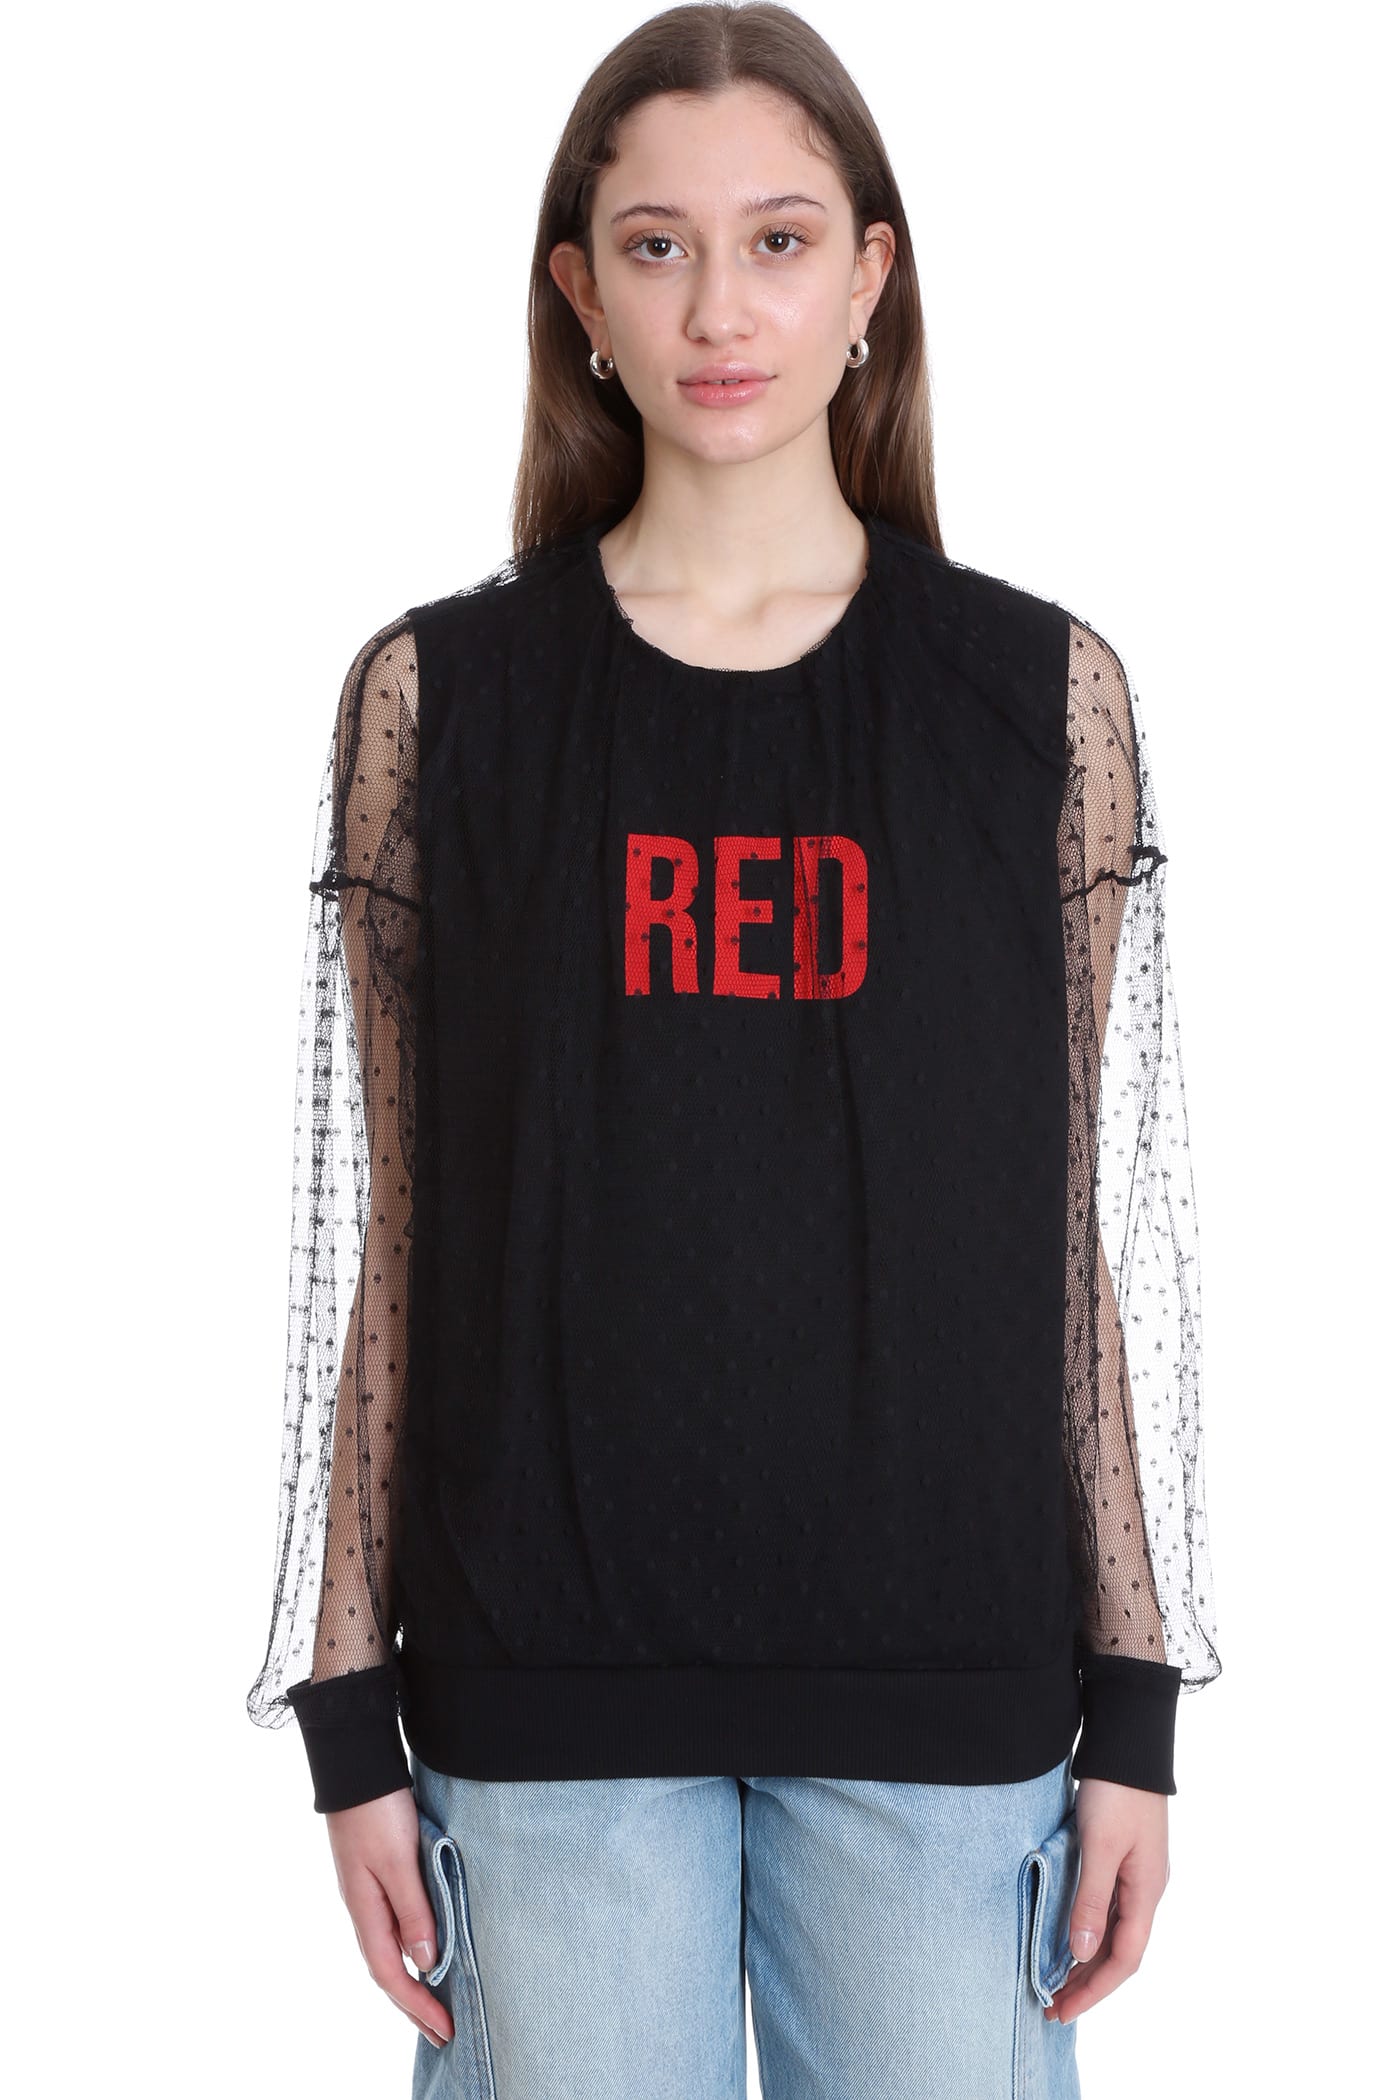 RED Valentino Knitwear In Black Cotton